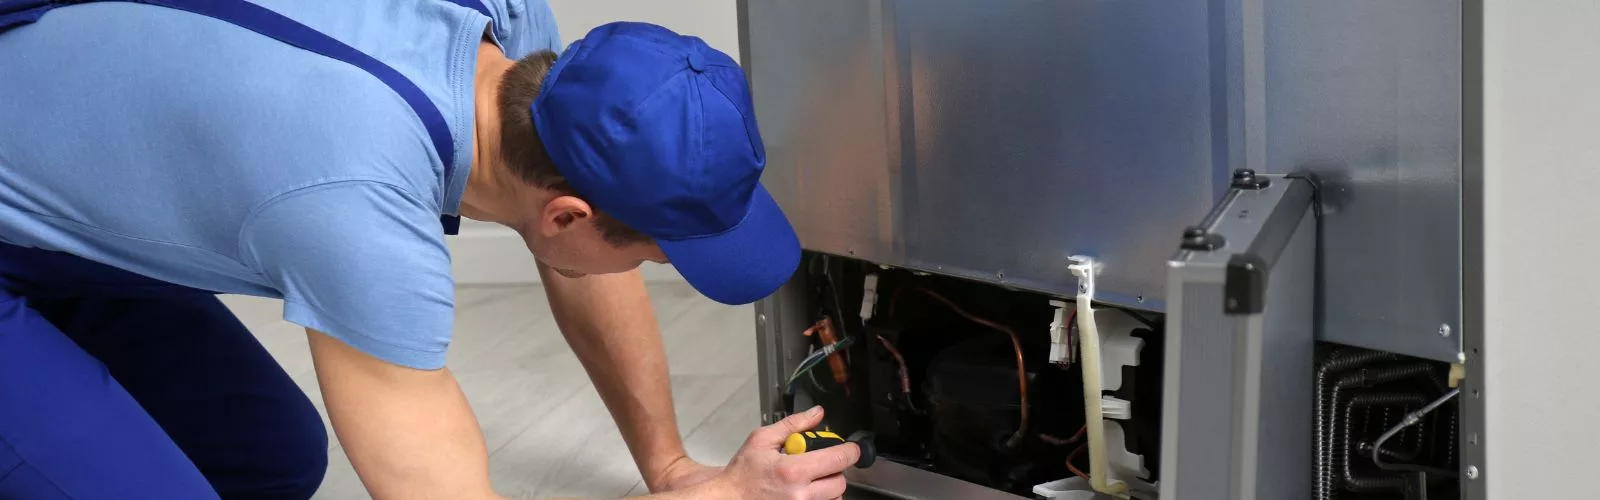 Edmonton Commercial Refrigeration Repair and Maintenance Services